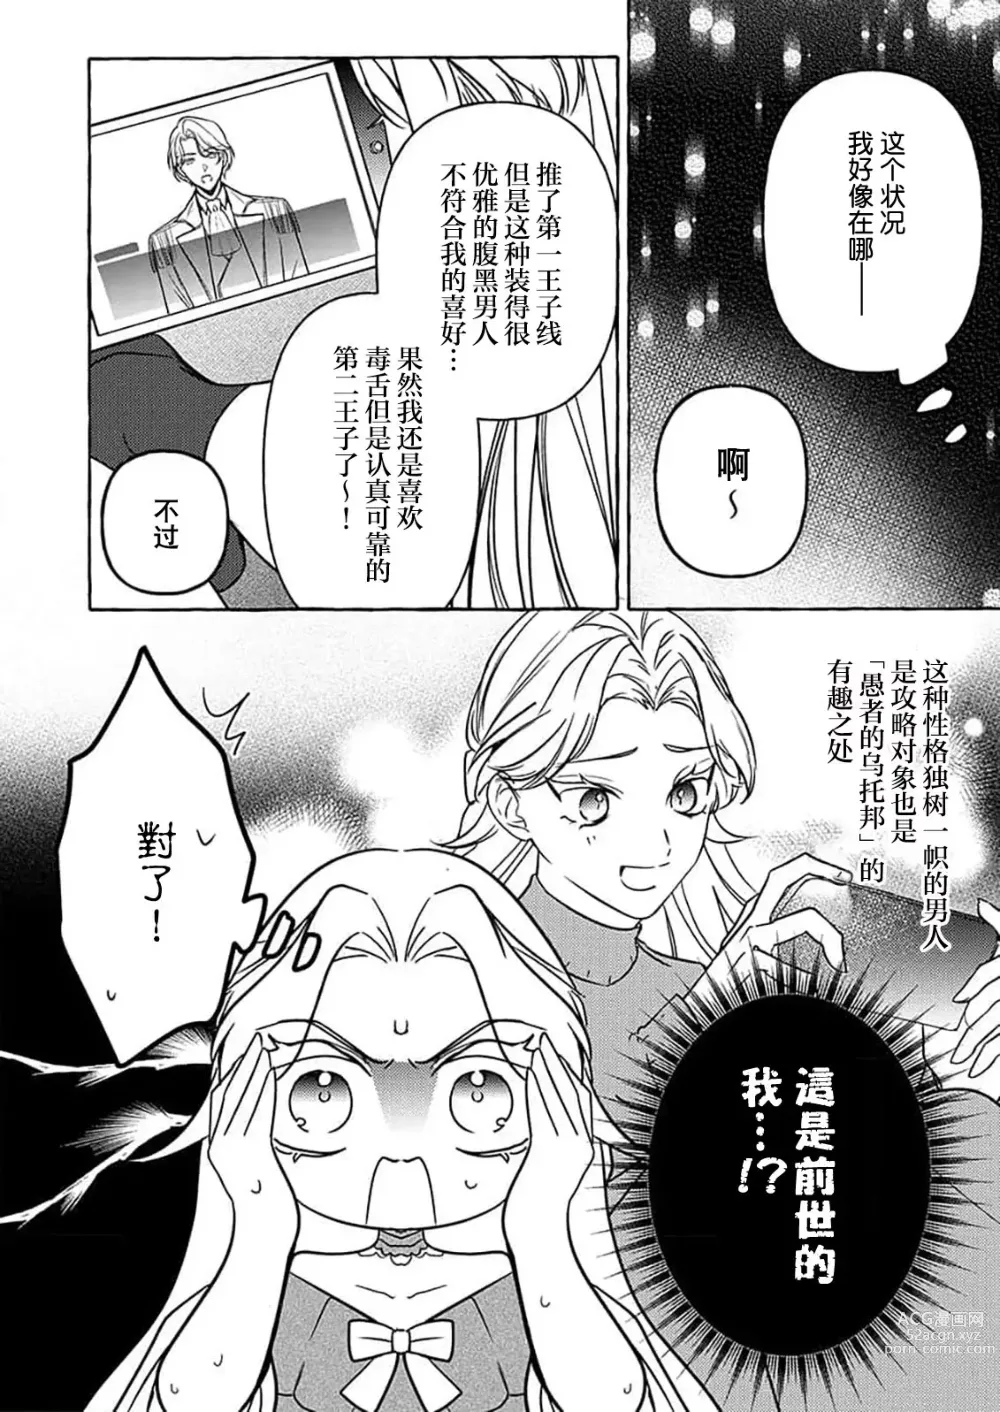 Page 4 of manga 这样的快感、是惩罚~第二次的婚约是和一直喜欢的初恋